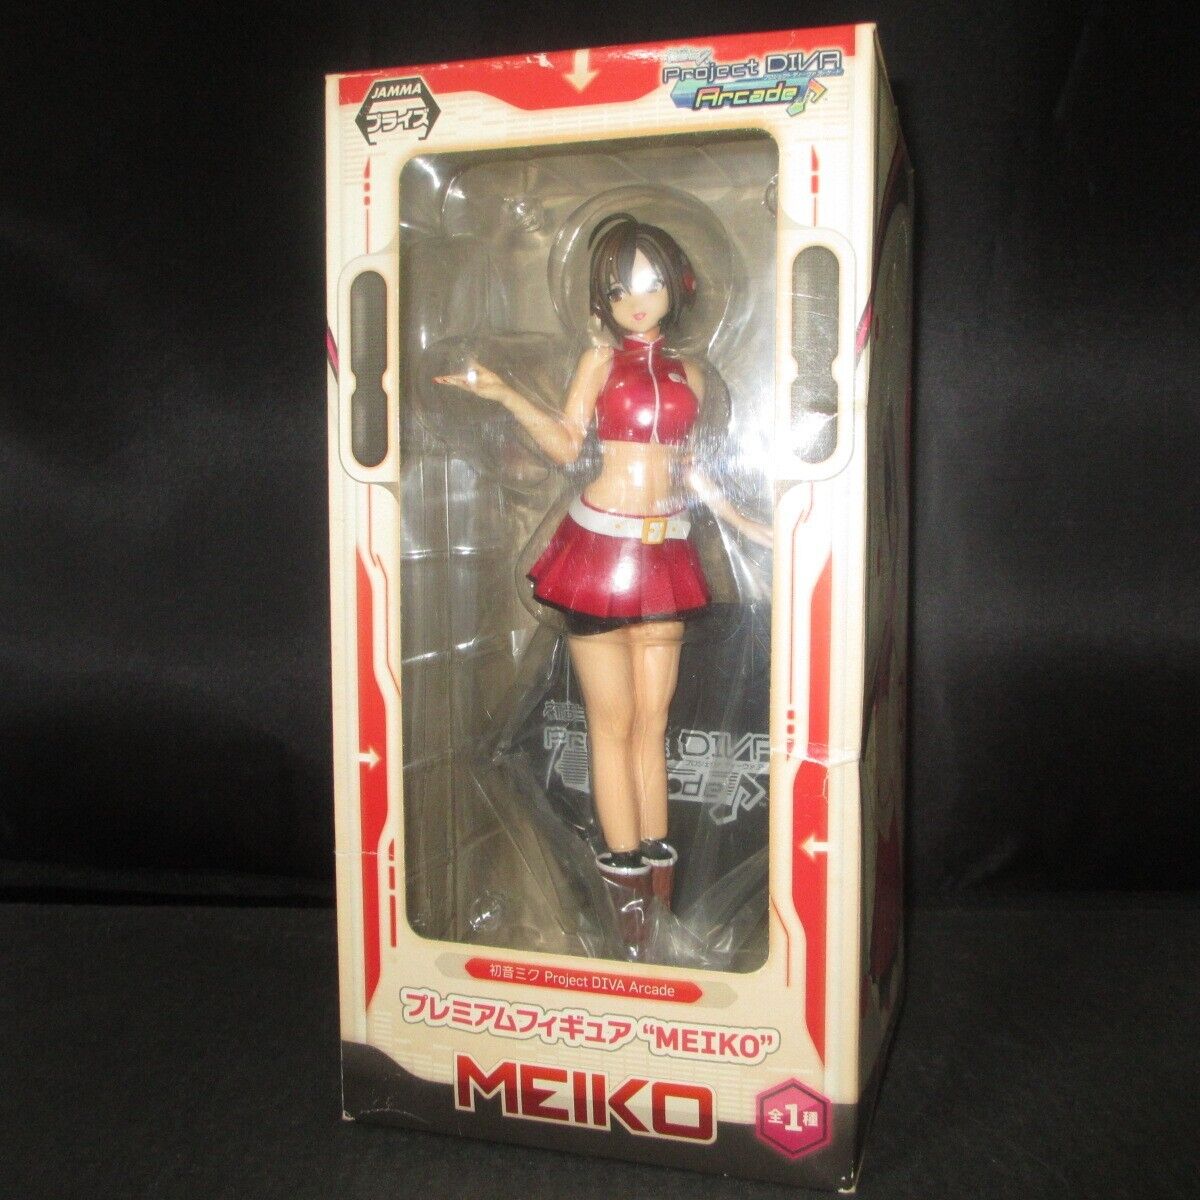 Meiko Premium Figure VOCALOID SEGA from Japan